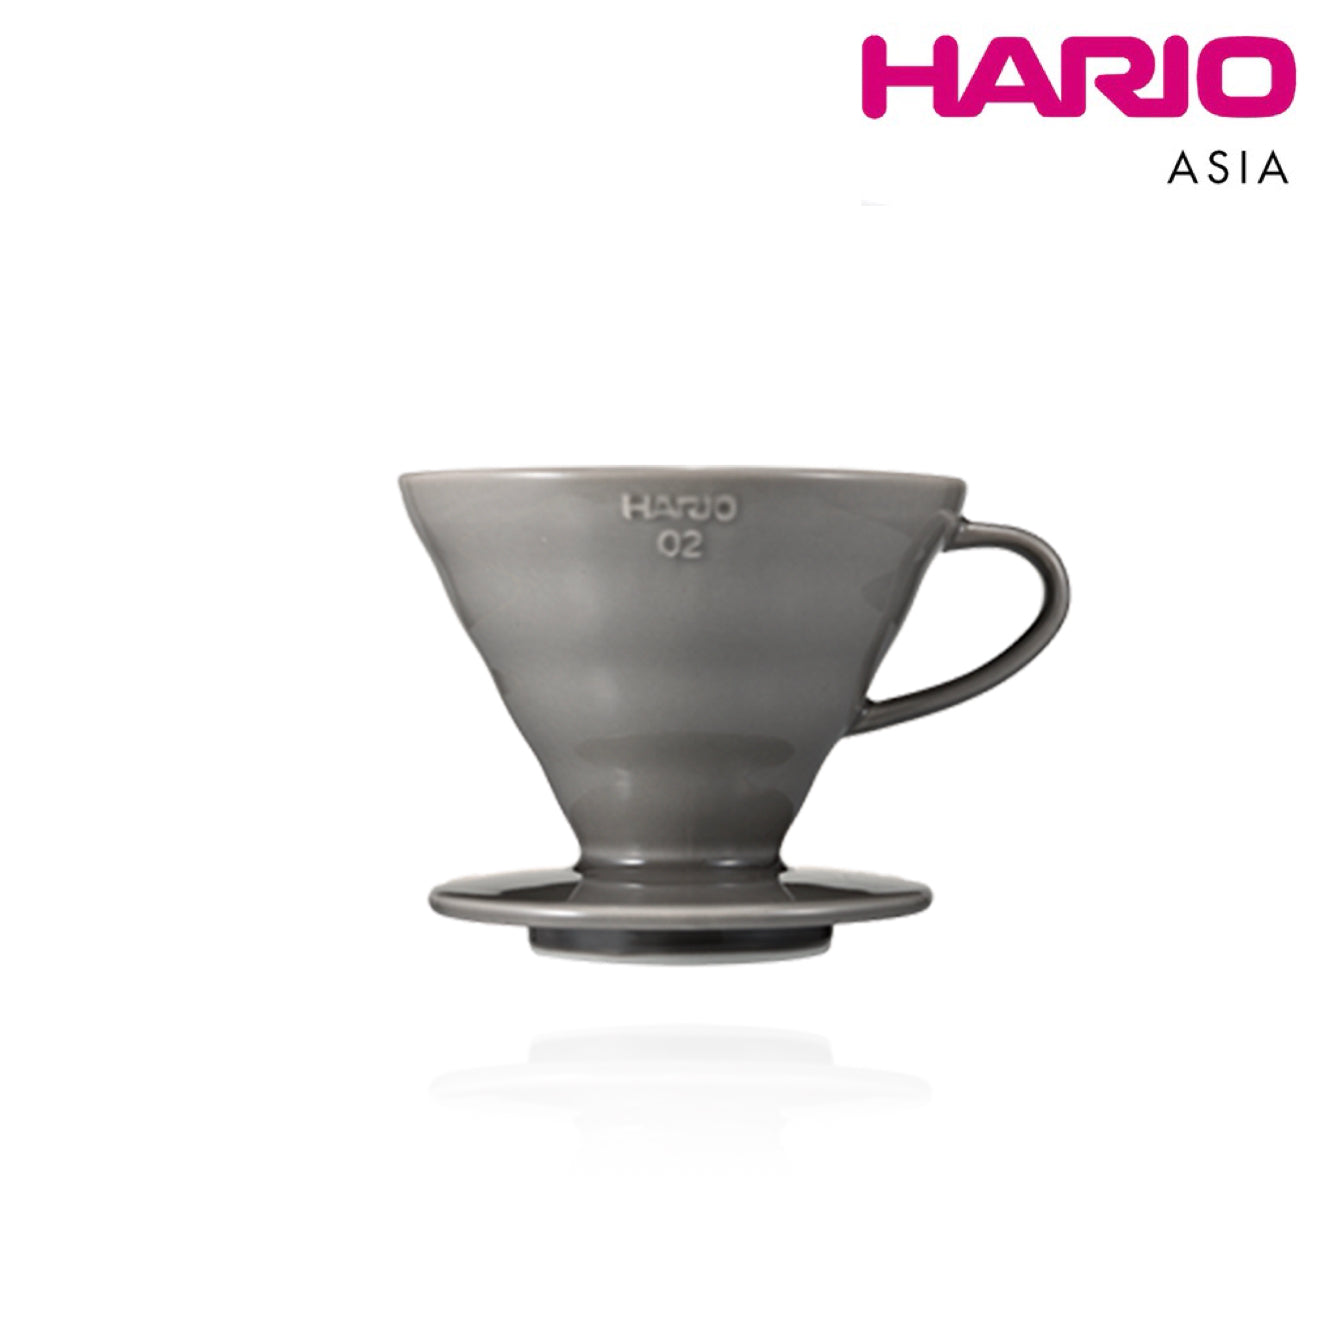 HARIO V60 COFFEE DRIPPER SET 02 GREY